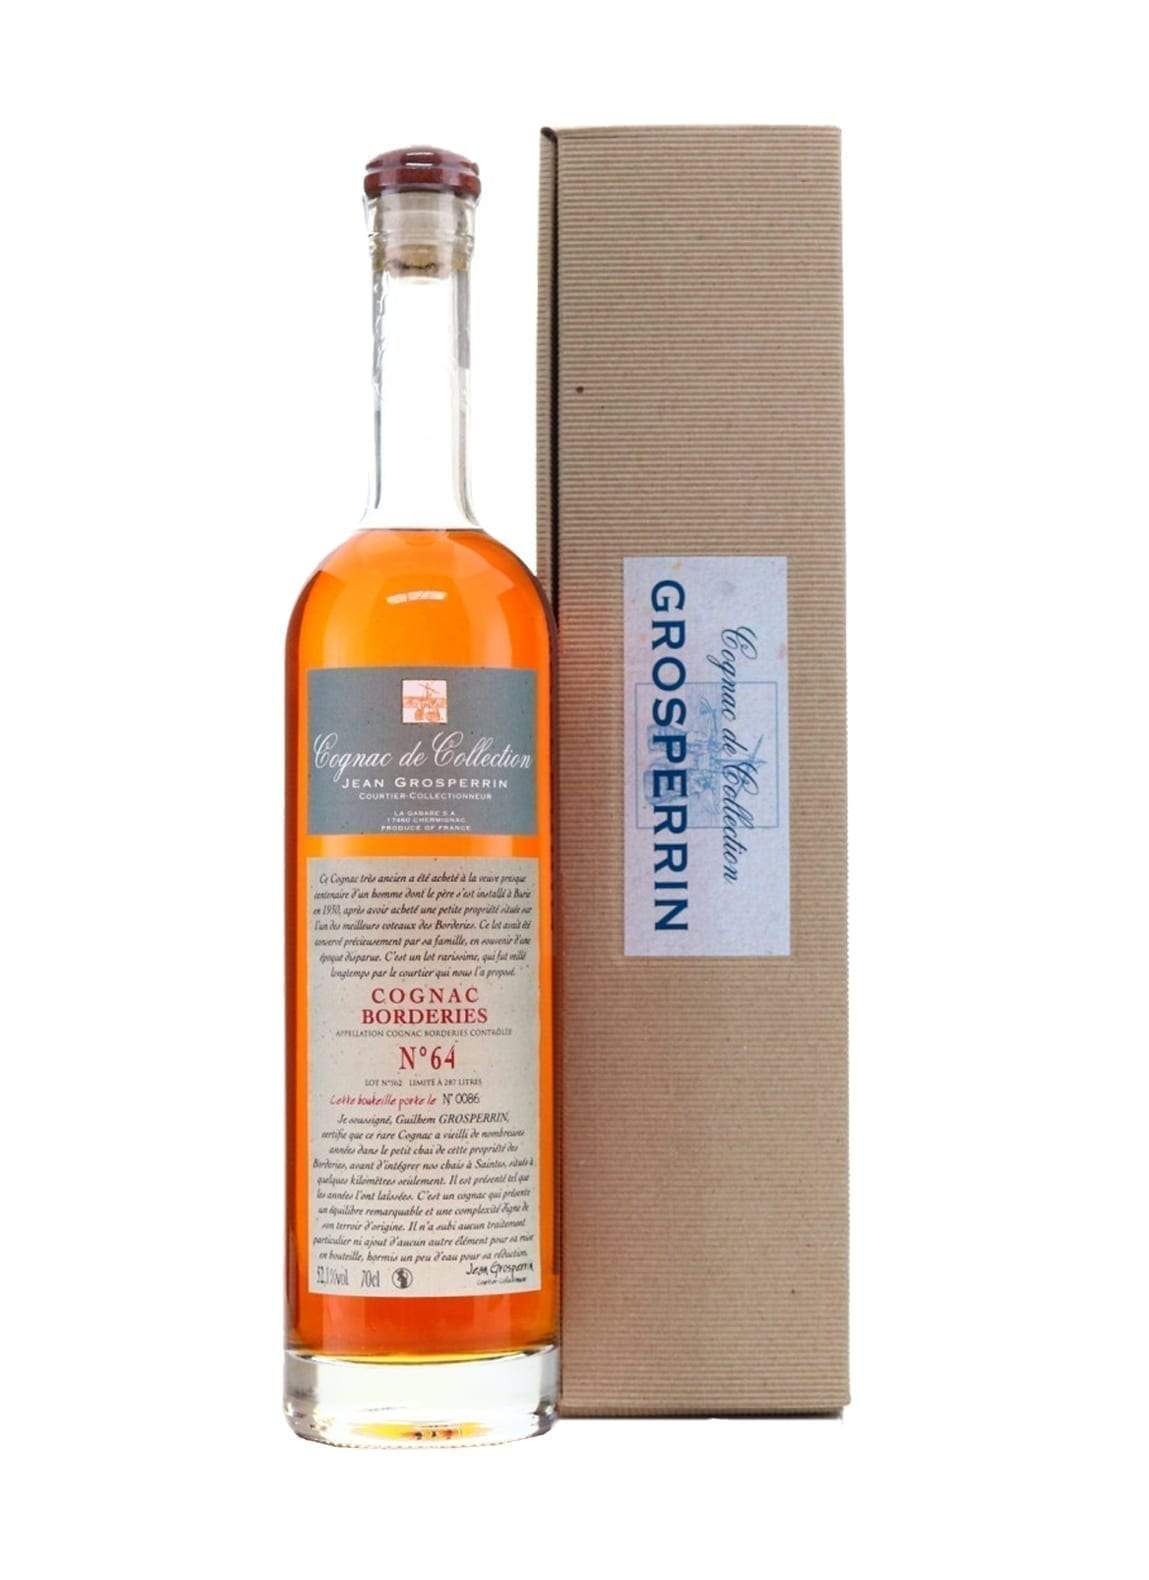 Grosperrin Cognac No.64 Borderies 52.1% 700ml | Brandy | Shop online at Spirits of France